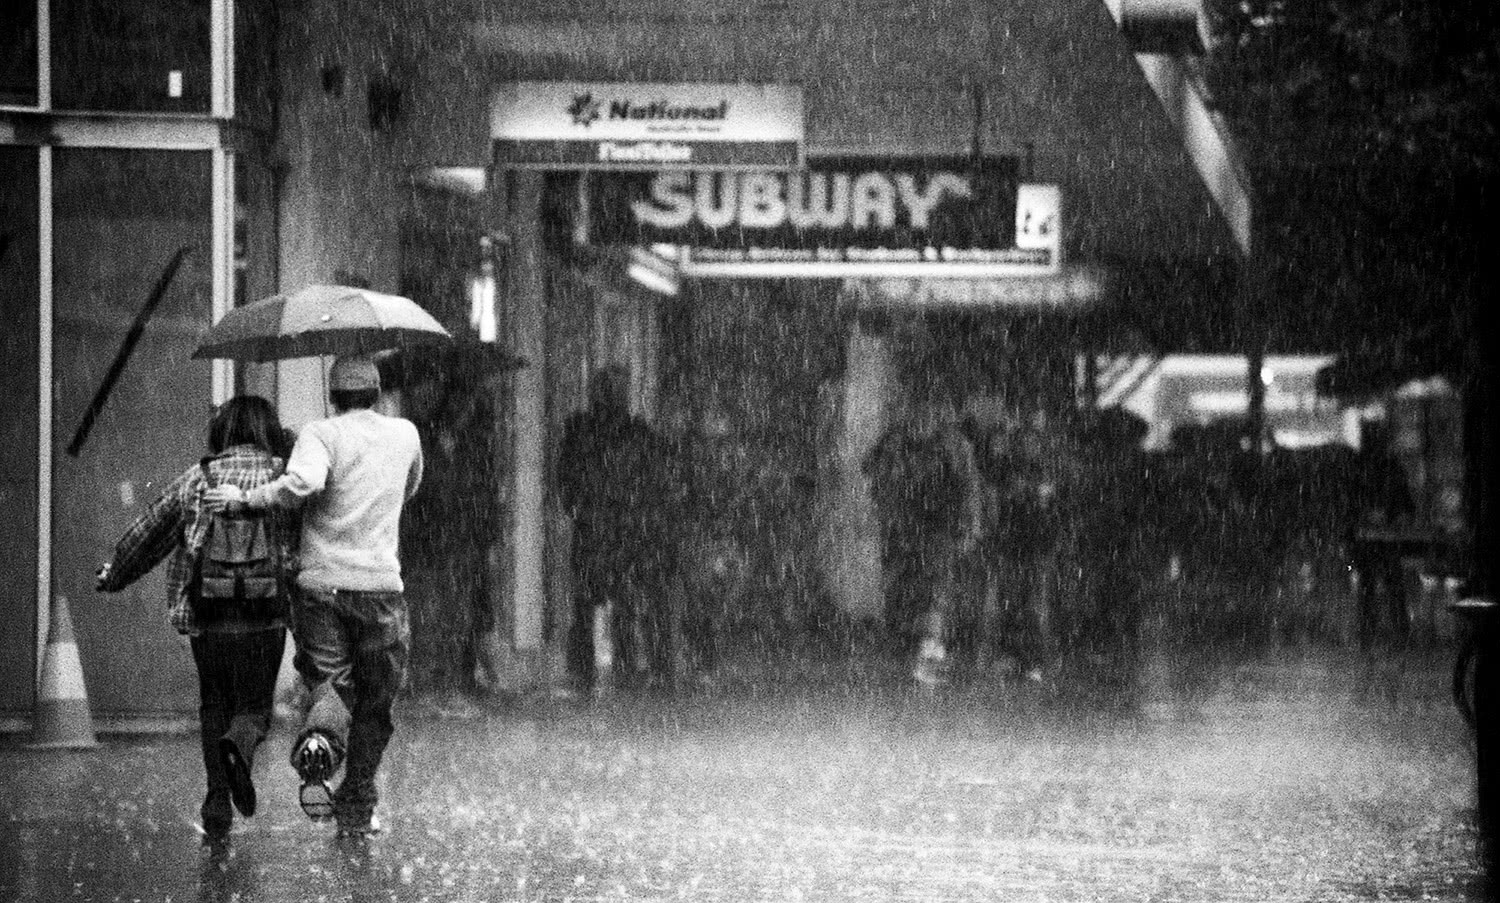 Running in rain Melbourne city